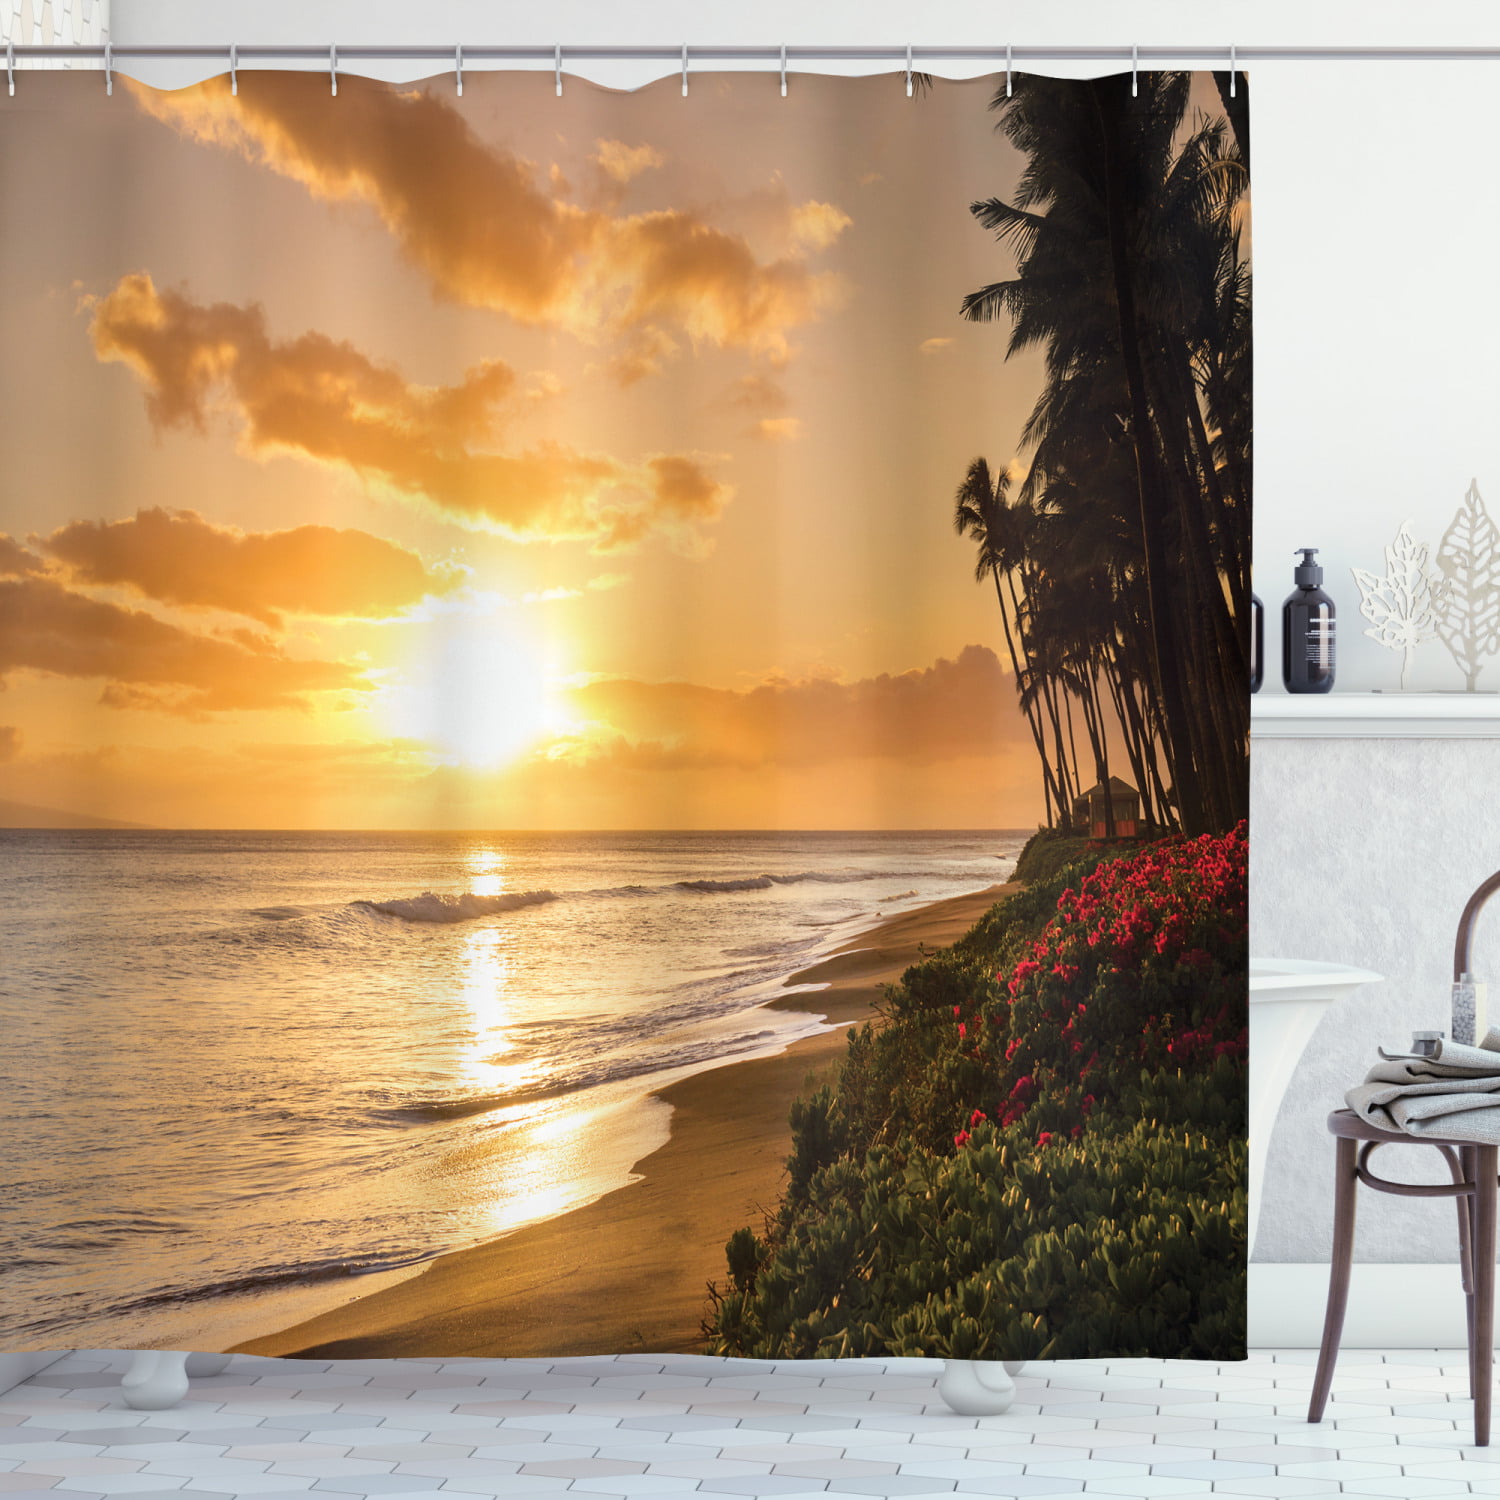 Tropical beach at sunset Shower Curtain Bathroom Decor Fabric & 12hooks 71*71in 